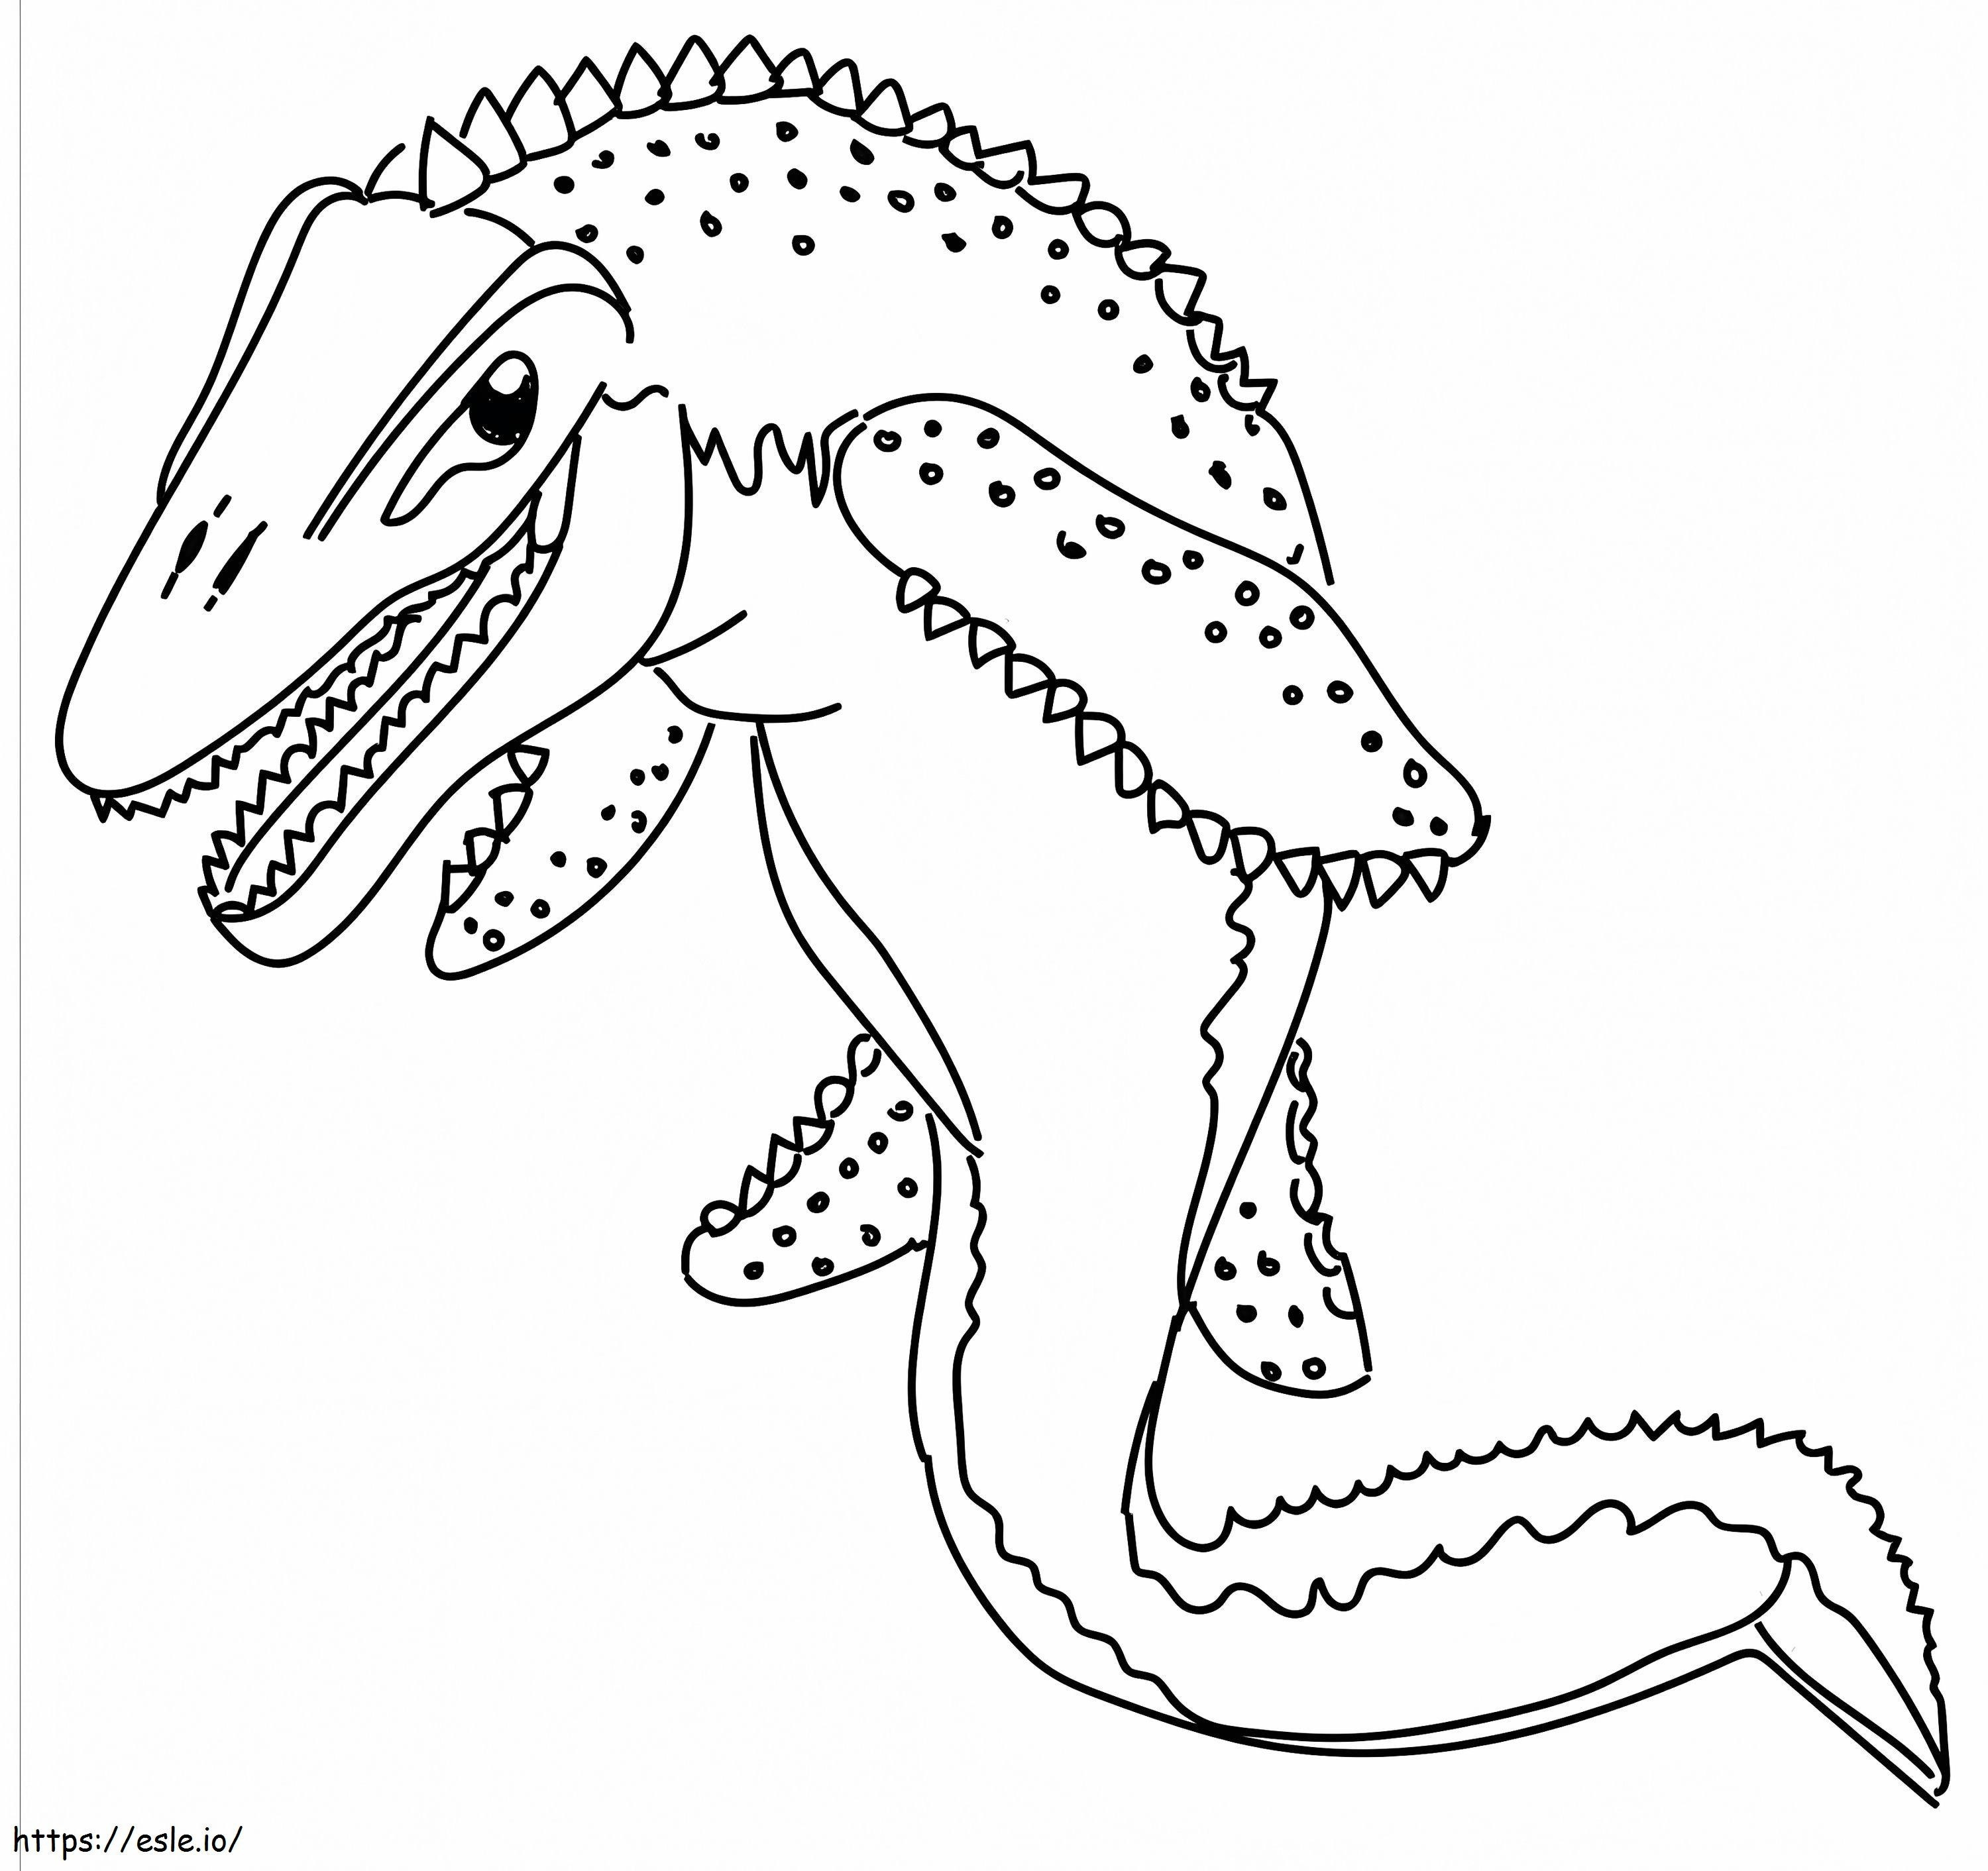 Dinossauro Mosassauro para colorir